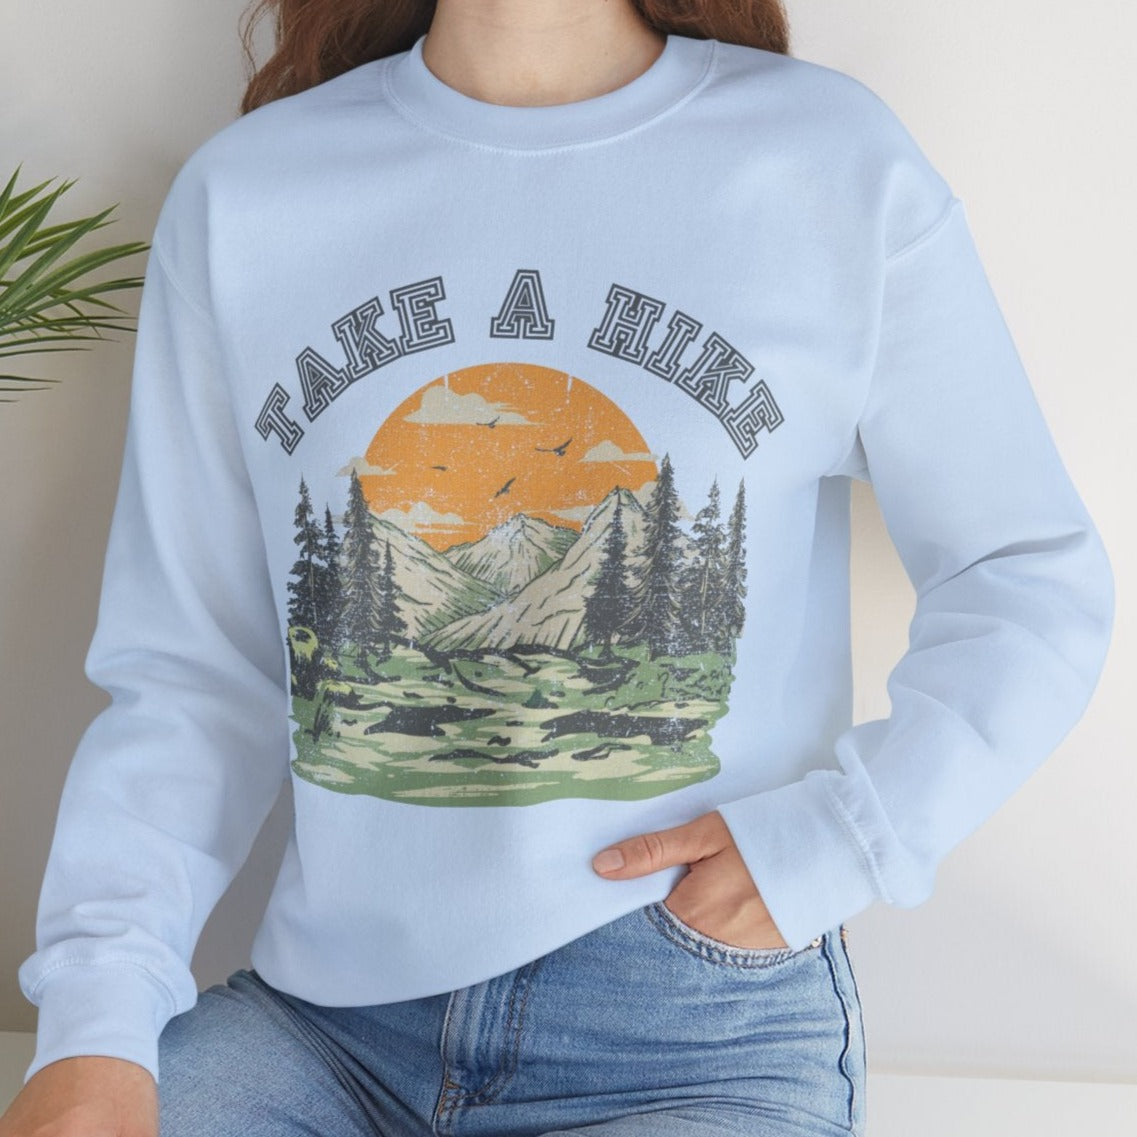 Take a Hike Sunrise Women's Sweatshirt: Nature Lover's Delight - Eddy and Rita